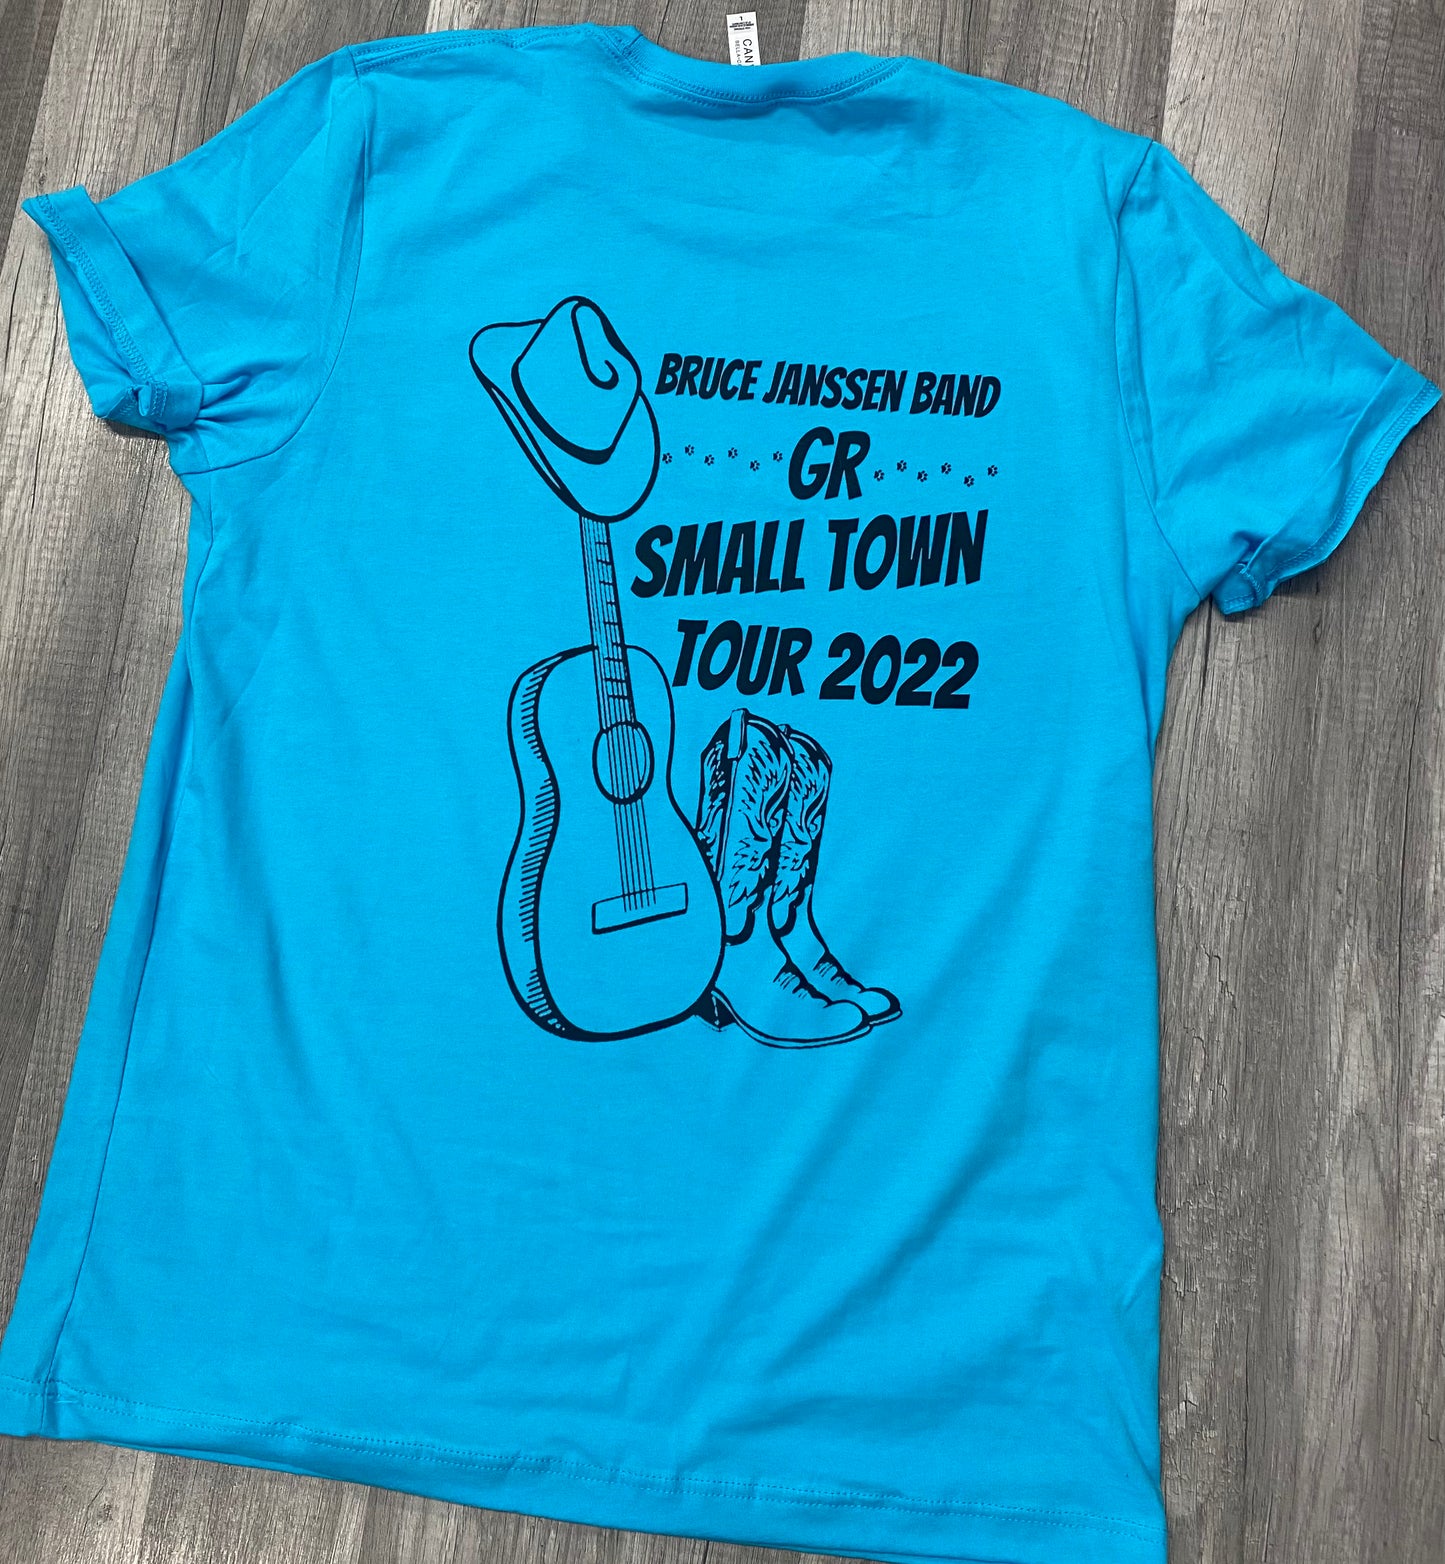 Bruce Janssen Band Small Town 2022 Concert Shirts